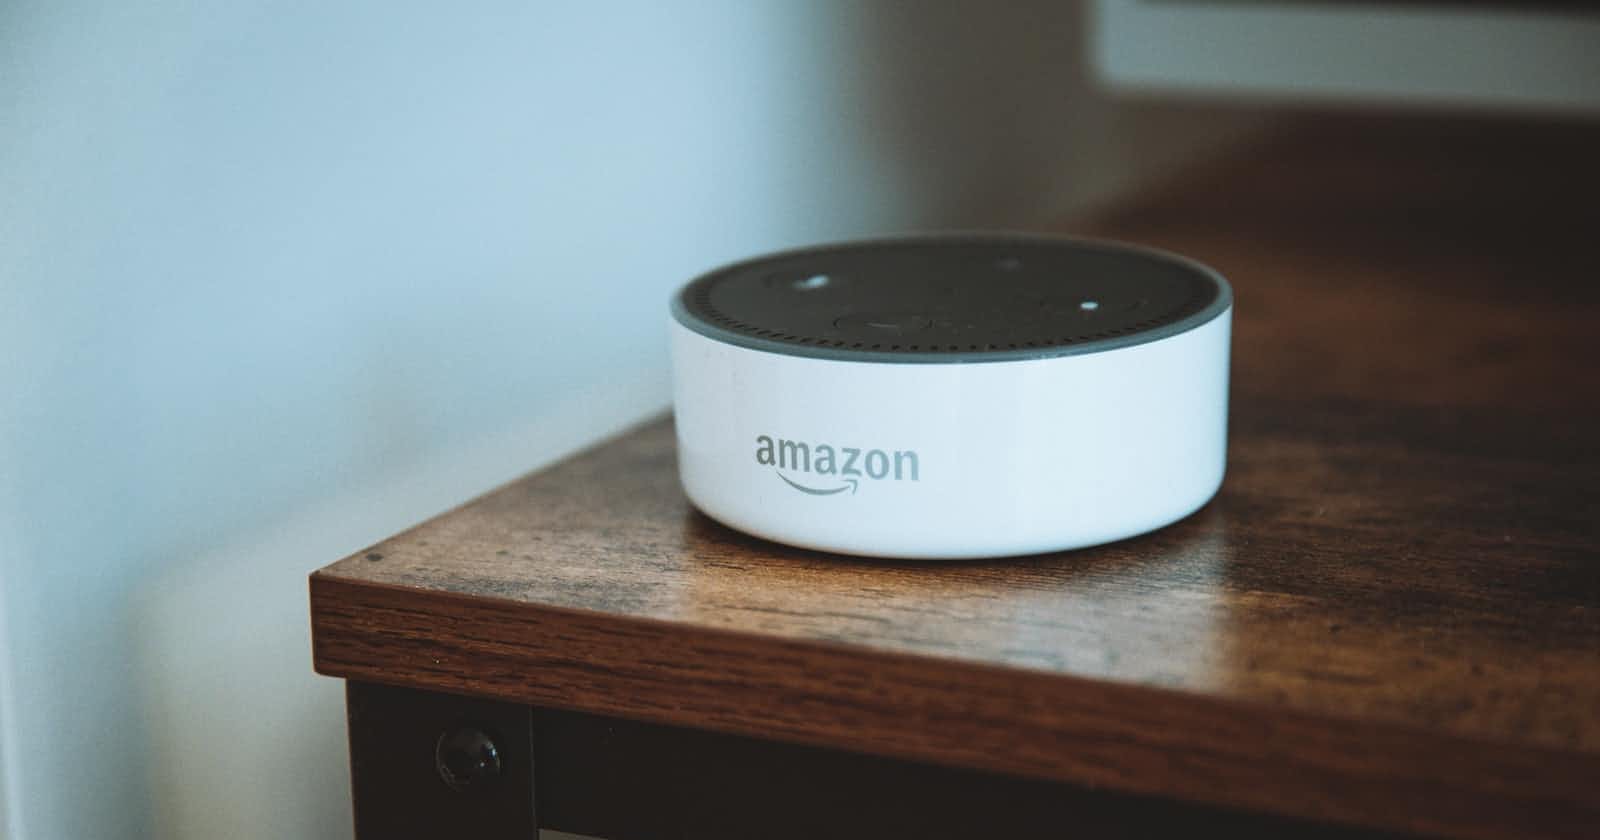 Amazon Alexa: What should I Know?